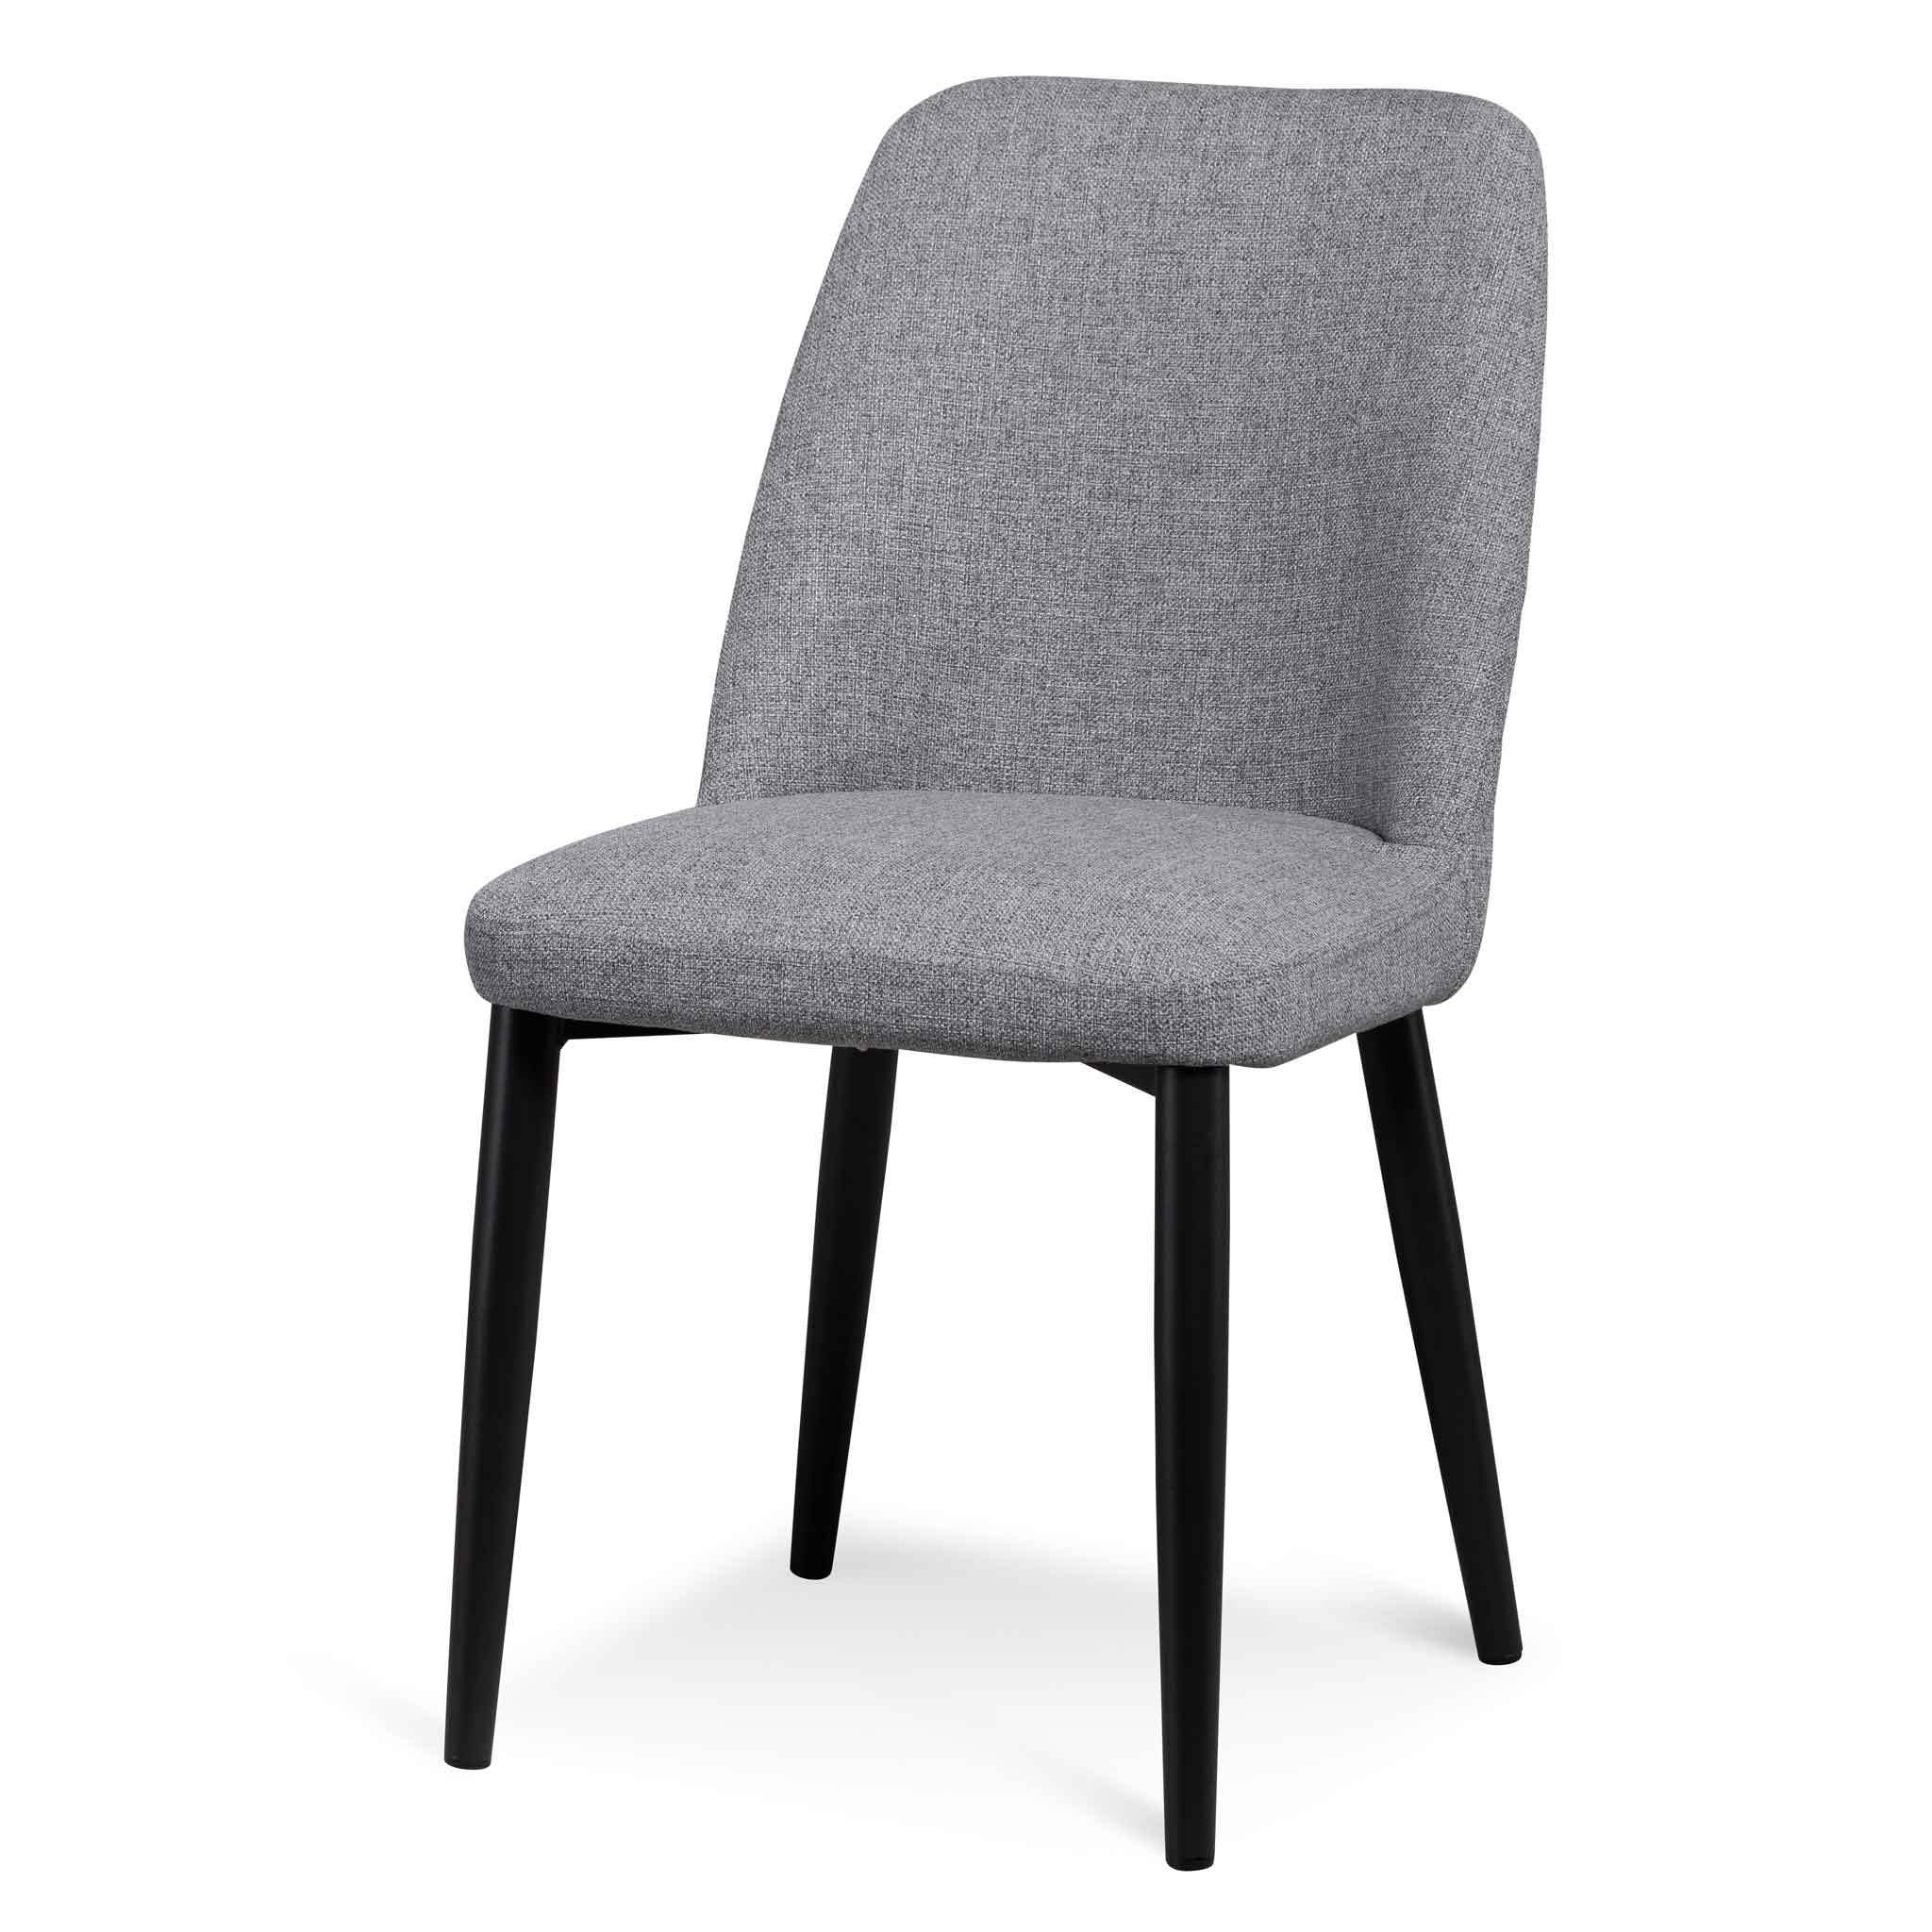 Harper Fabric Dining Chair - Pebble Grey in Black Legs